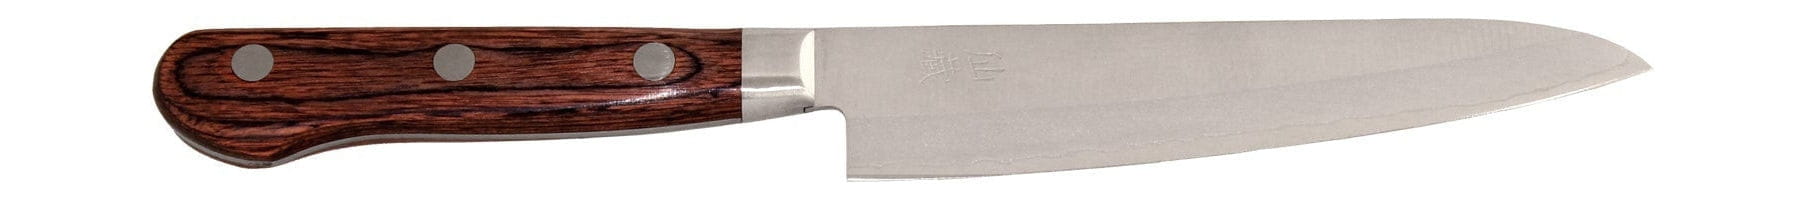 Senzo Clad jako 04 Universal Knife, 13,5 cm